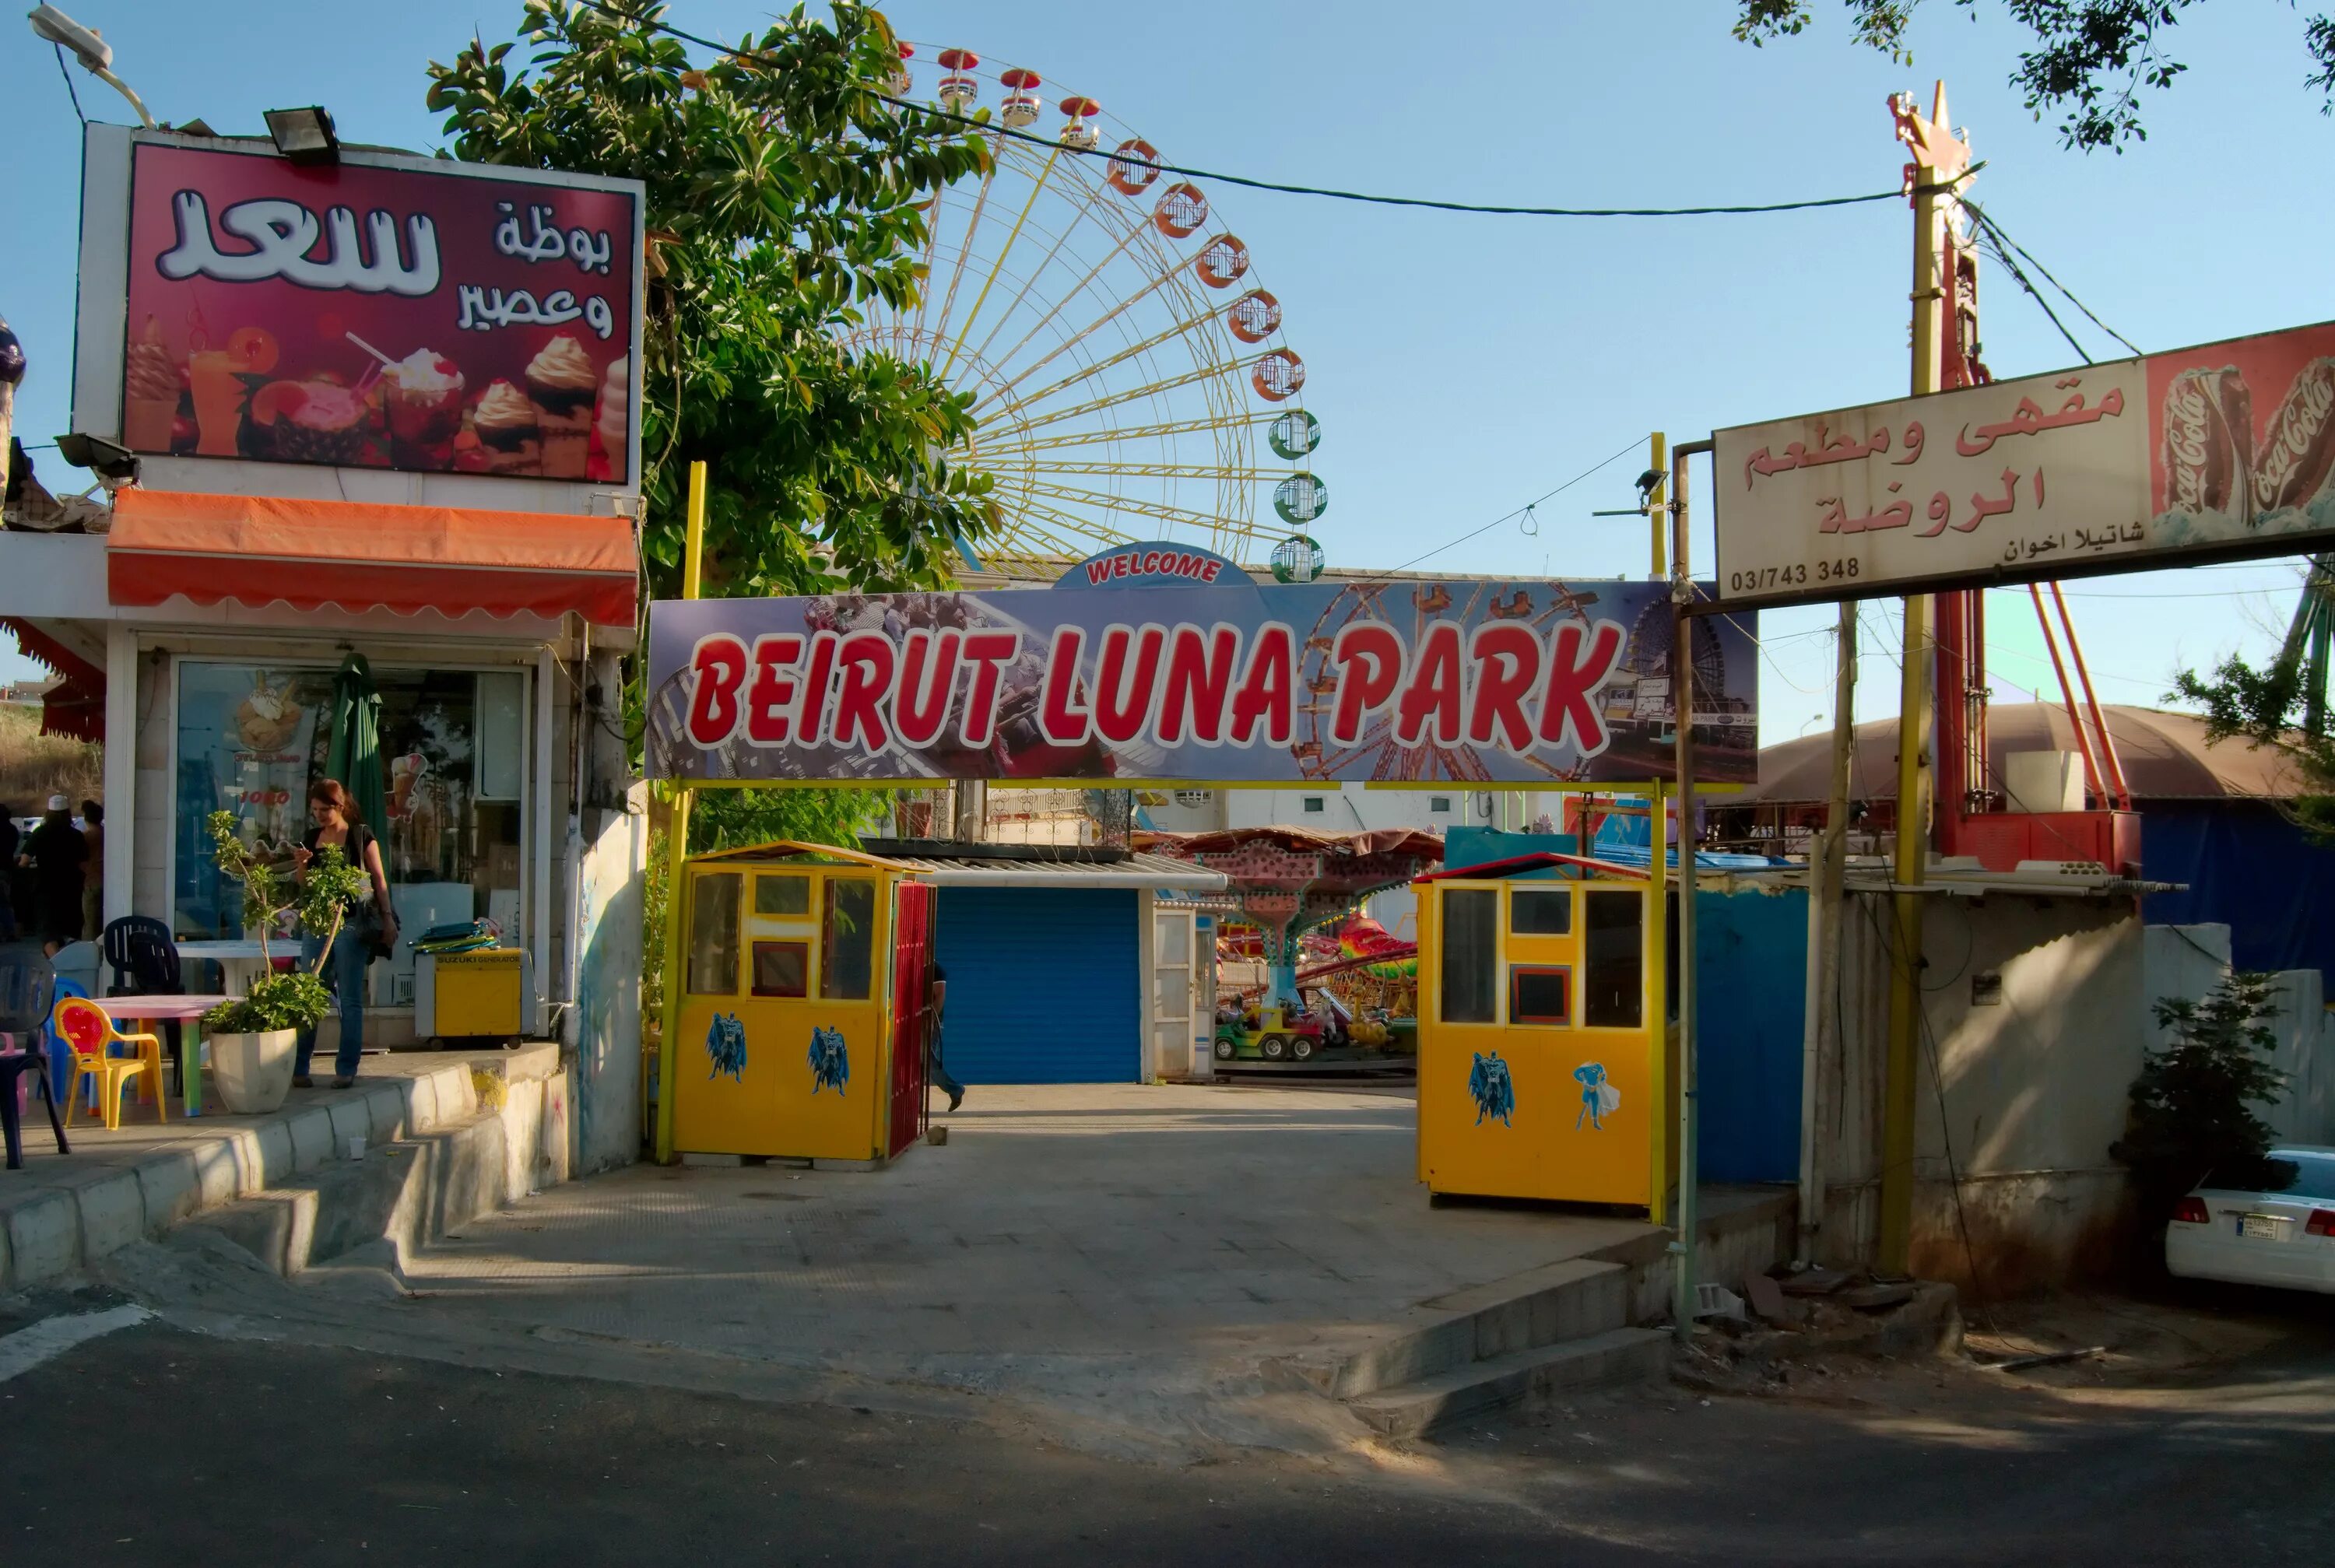 Beirut Luna Park. Luna Park, Cairo. Barcelona Park Luna. Luna Park fargona.